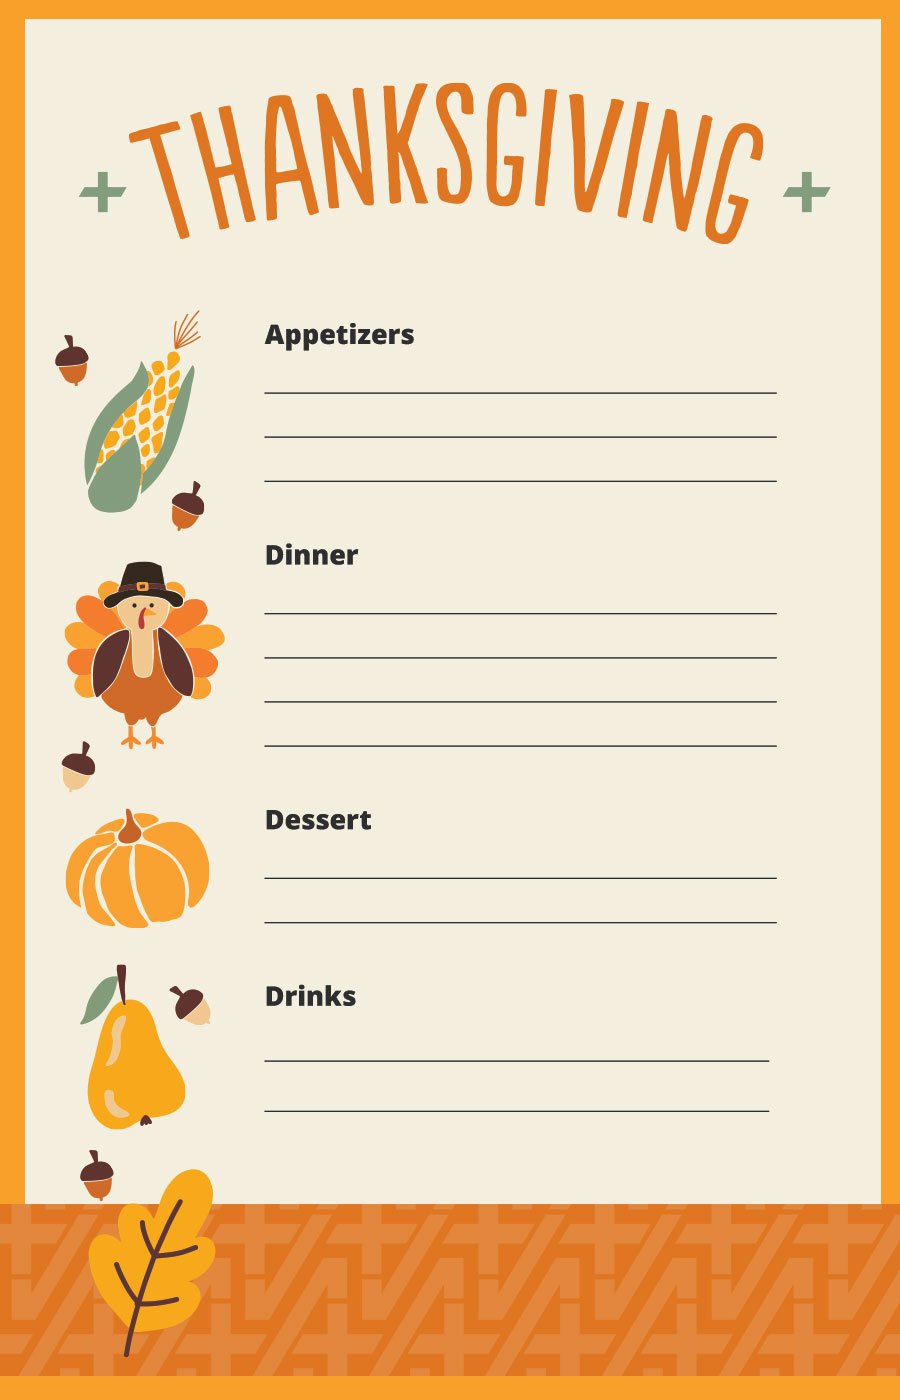 Thanksgiving shopping list